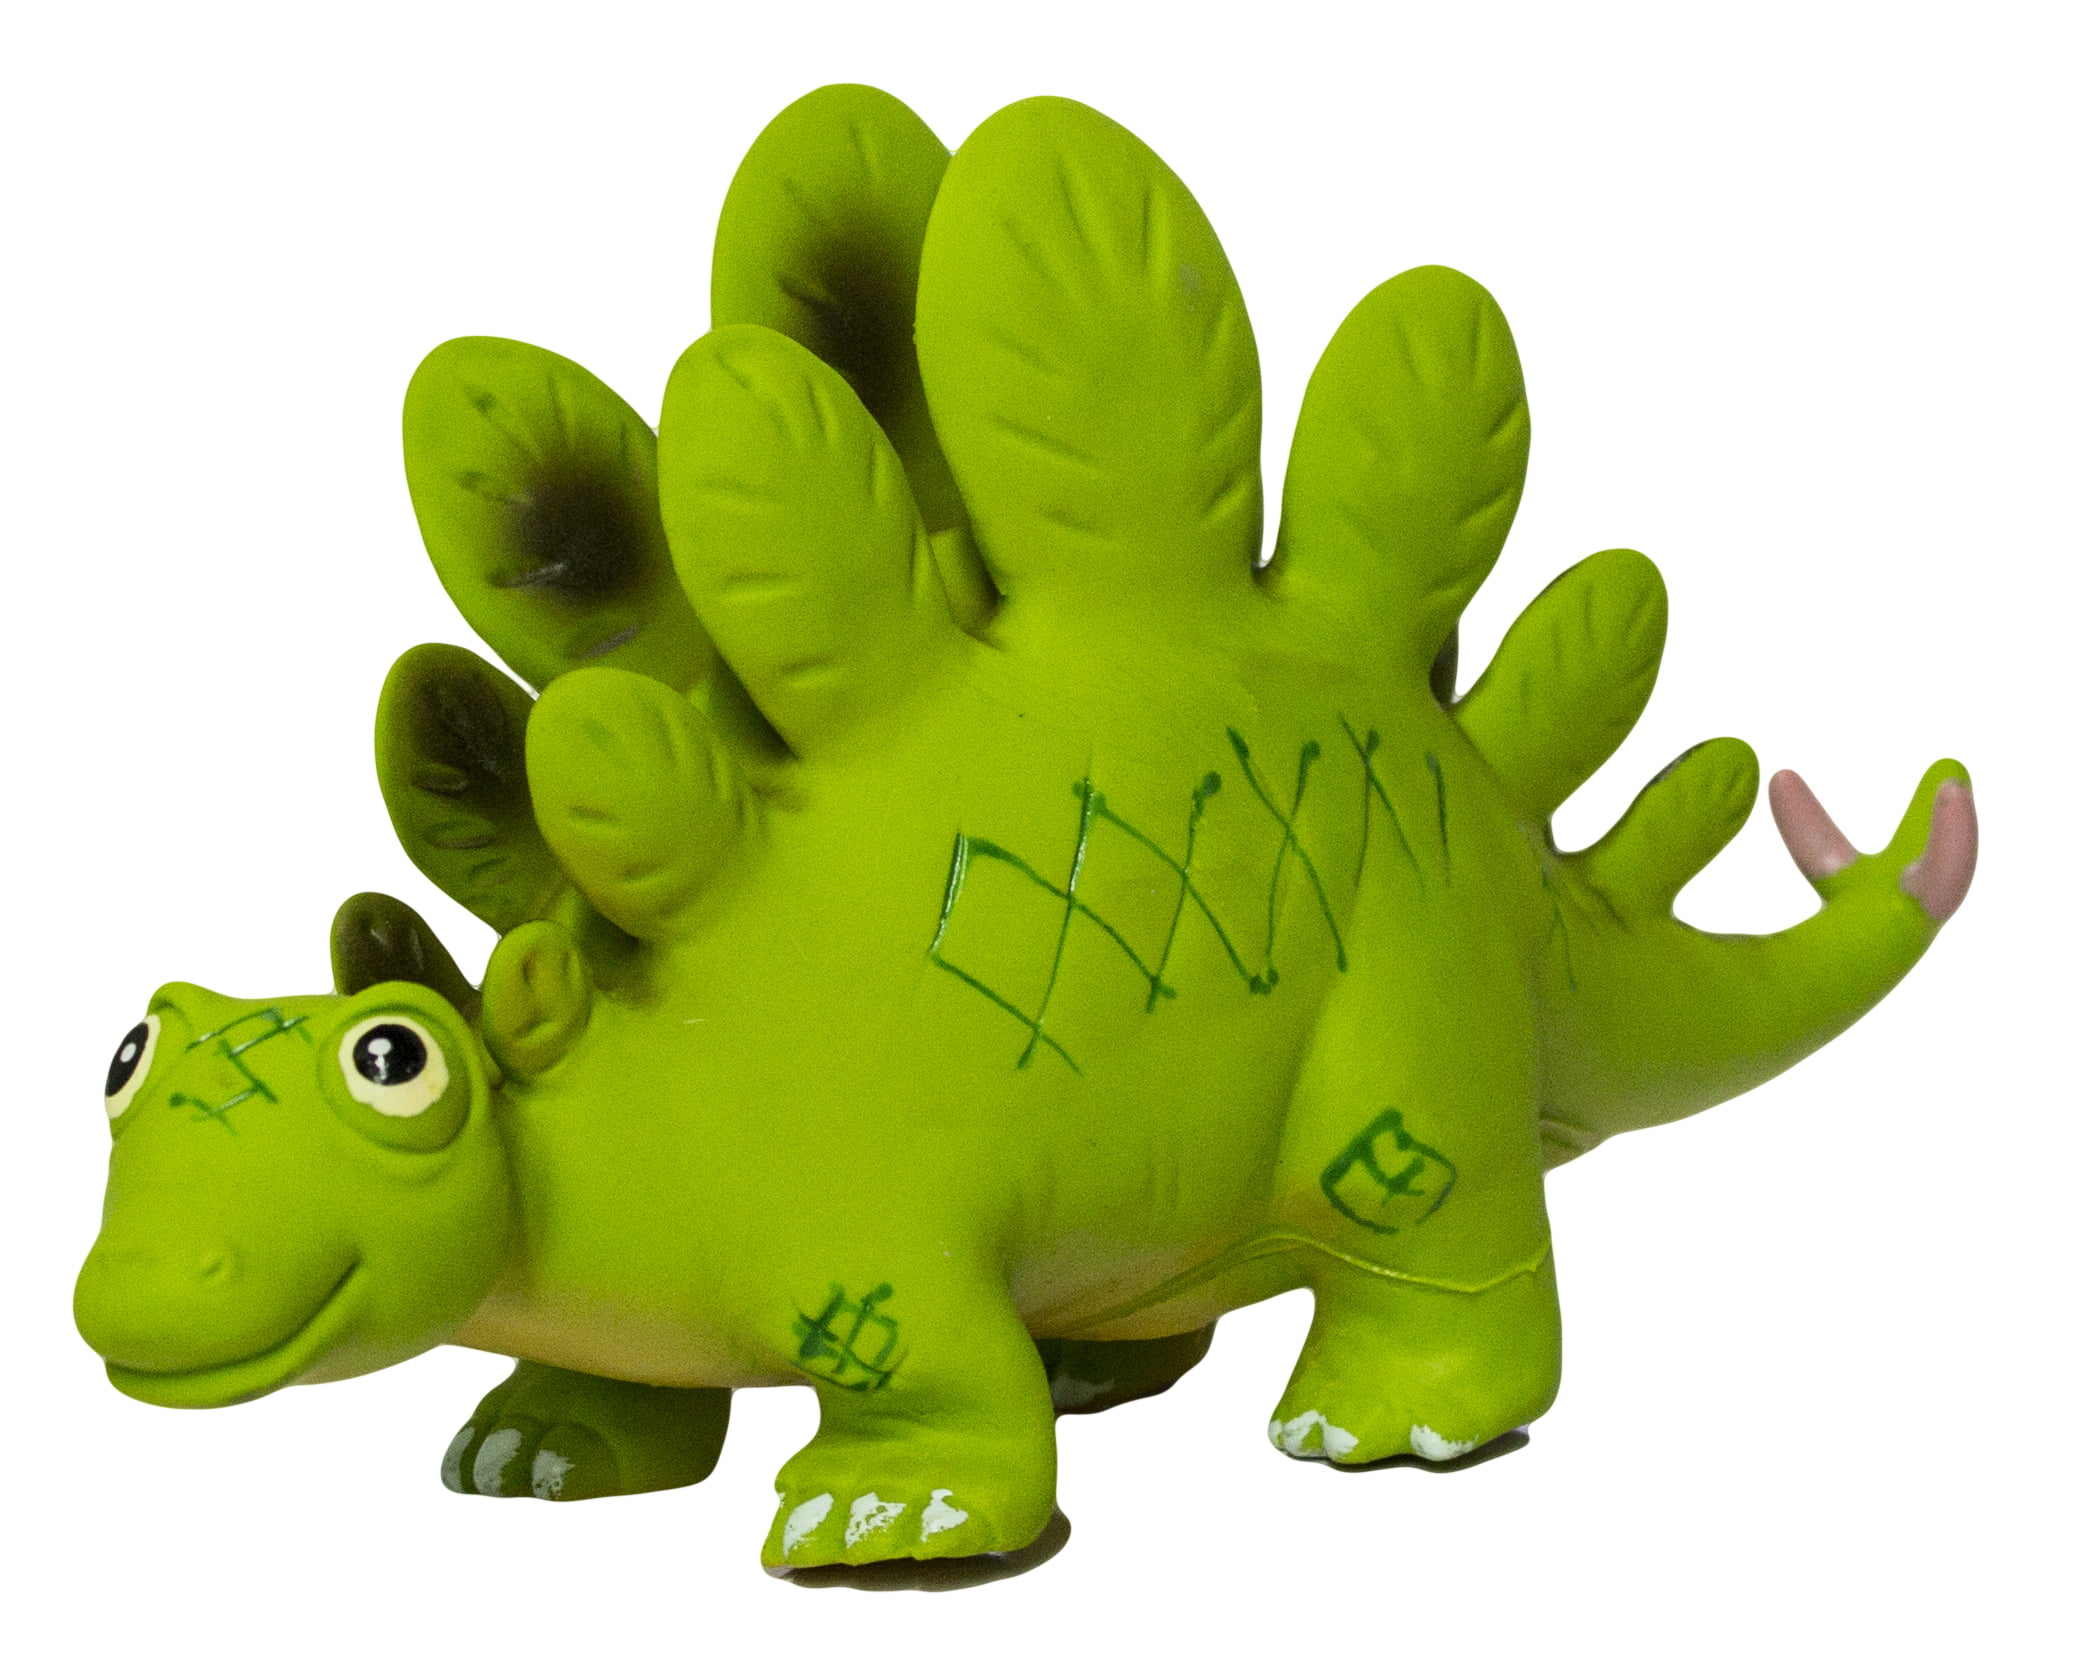 LARGE Soft Foam Rubber Stuffed STEGOSAURUS Dinosaur Toy Action Figures and Sound 